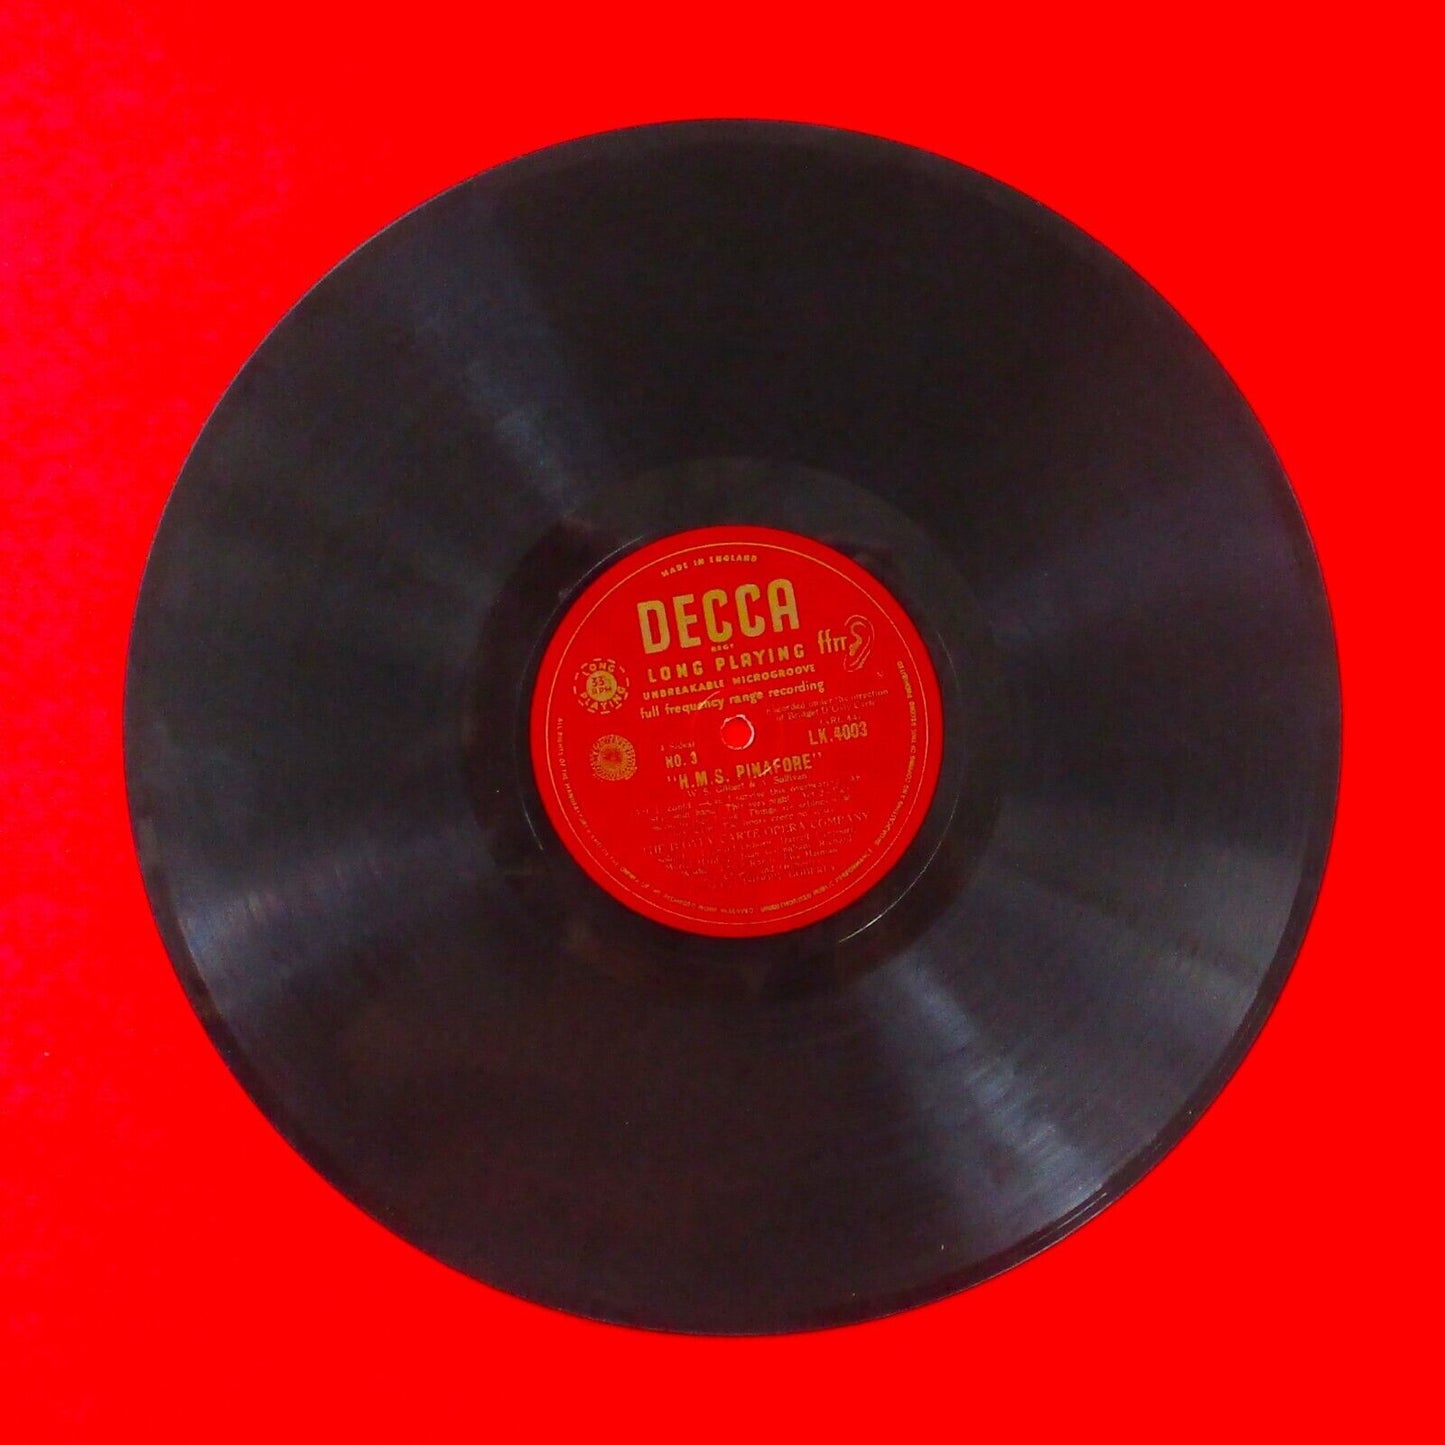 Gilbert & Sullivan ‎HMS Pinafore Vinyl Album LP 1950 UK Musical